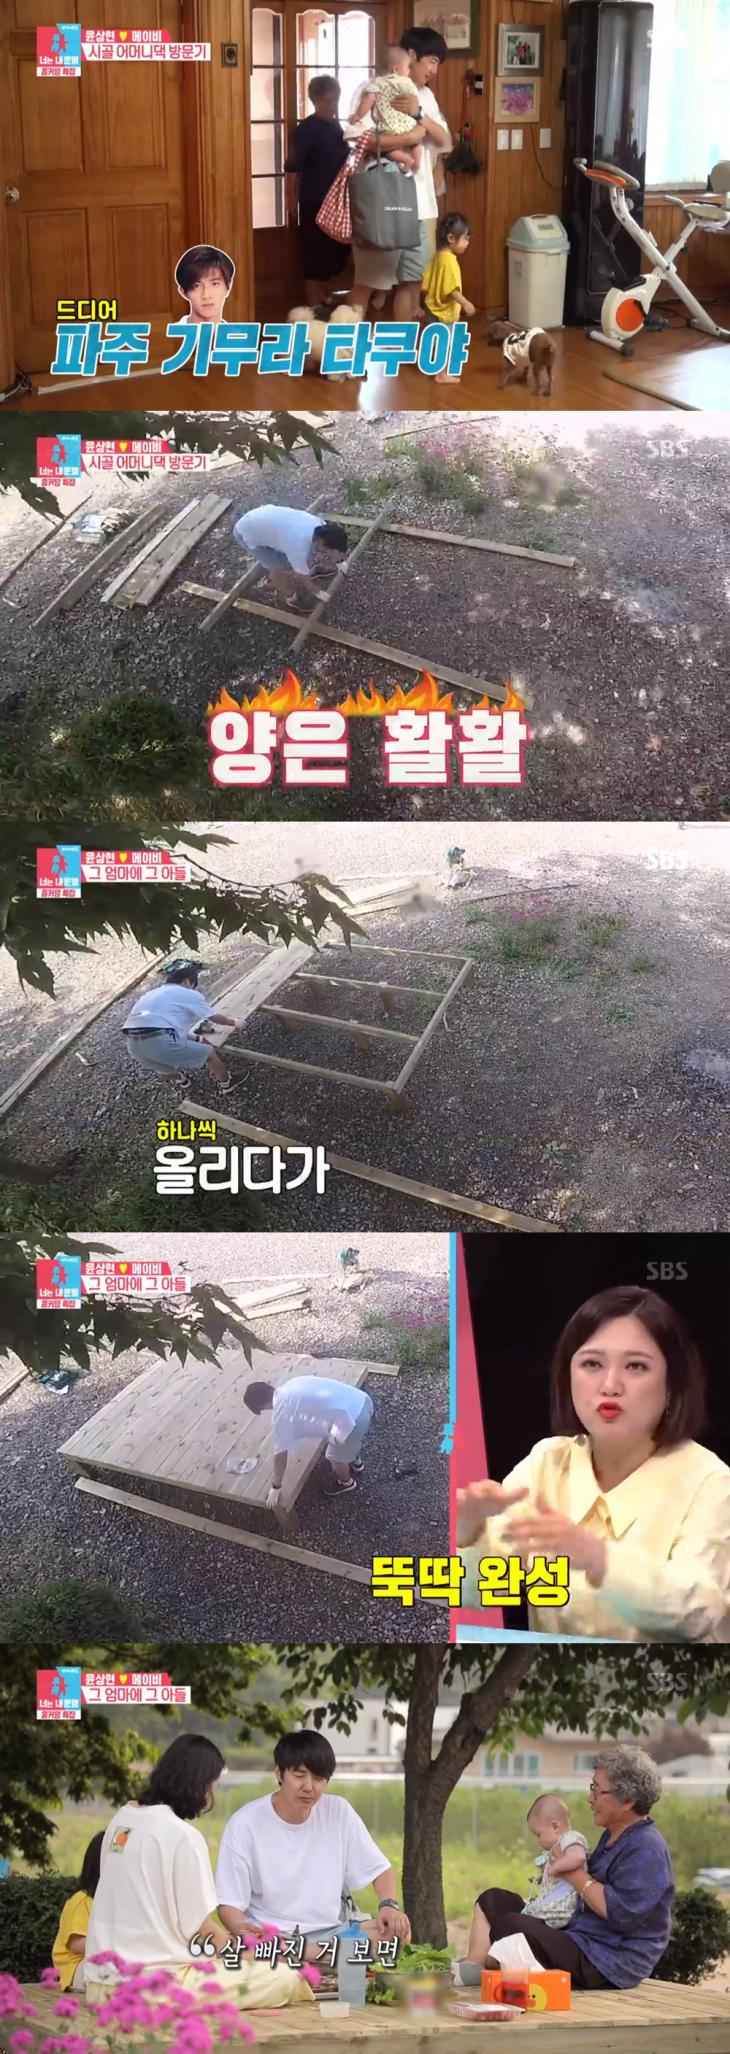 SBS '동상이몽 시즌2 - 너는 내 운명' 방송 캡쳐